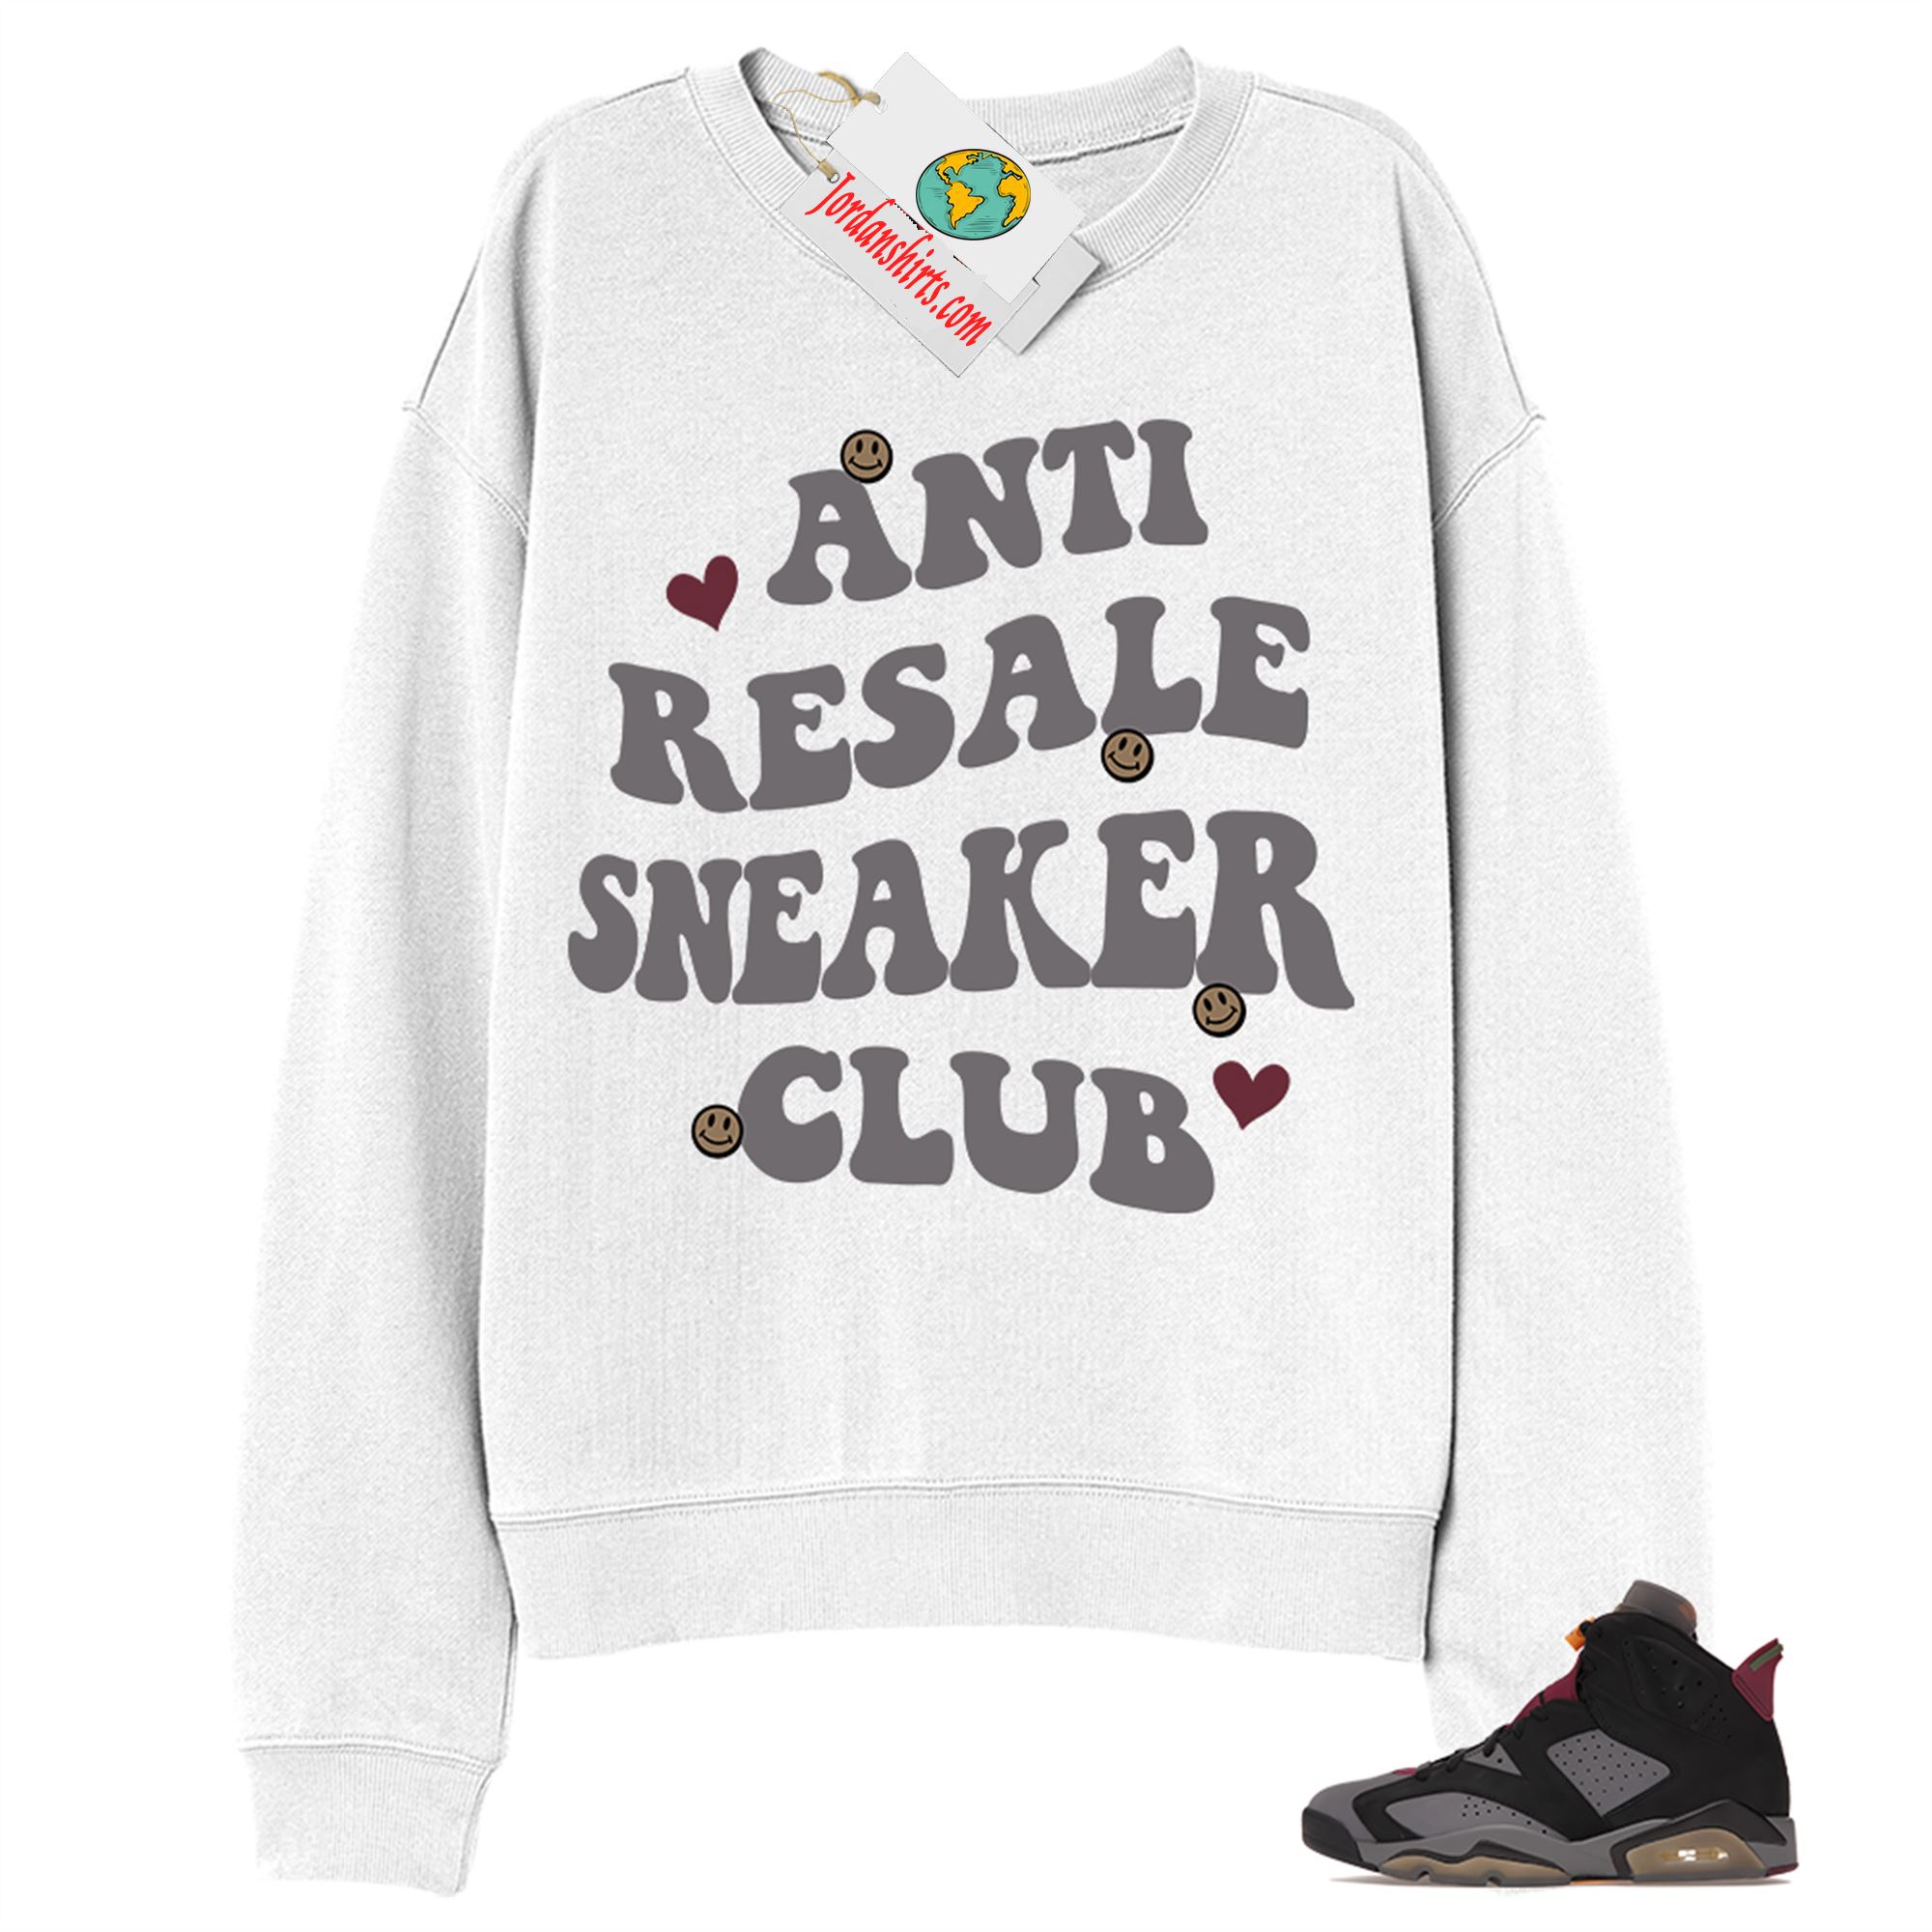 Jordan 6 Sweatshirt, Anti Resale Sneaker Club White Sweatshirt Air Jordan 6 Bordeaux 6s Full Size Up To 5xl